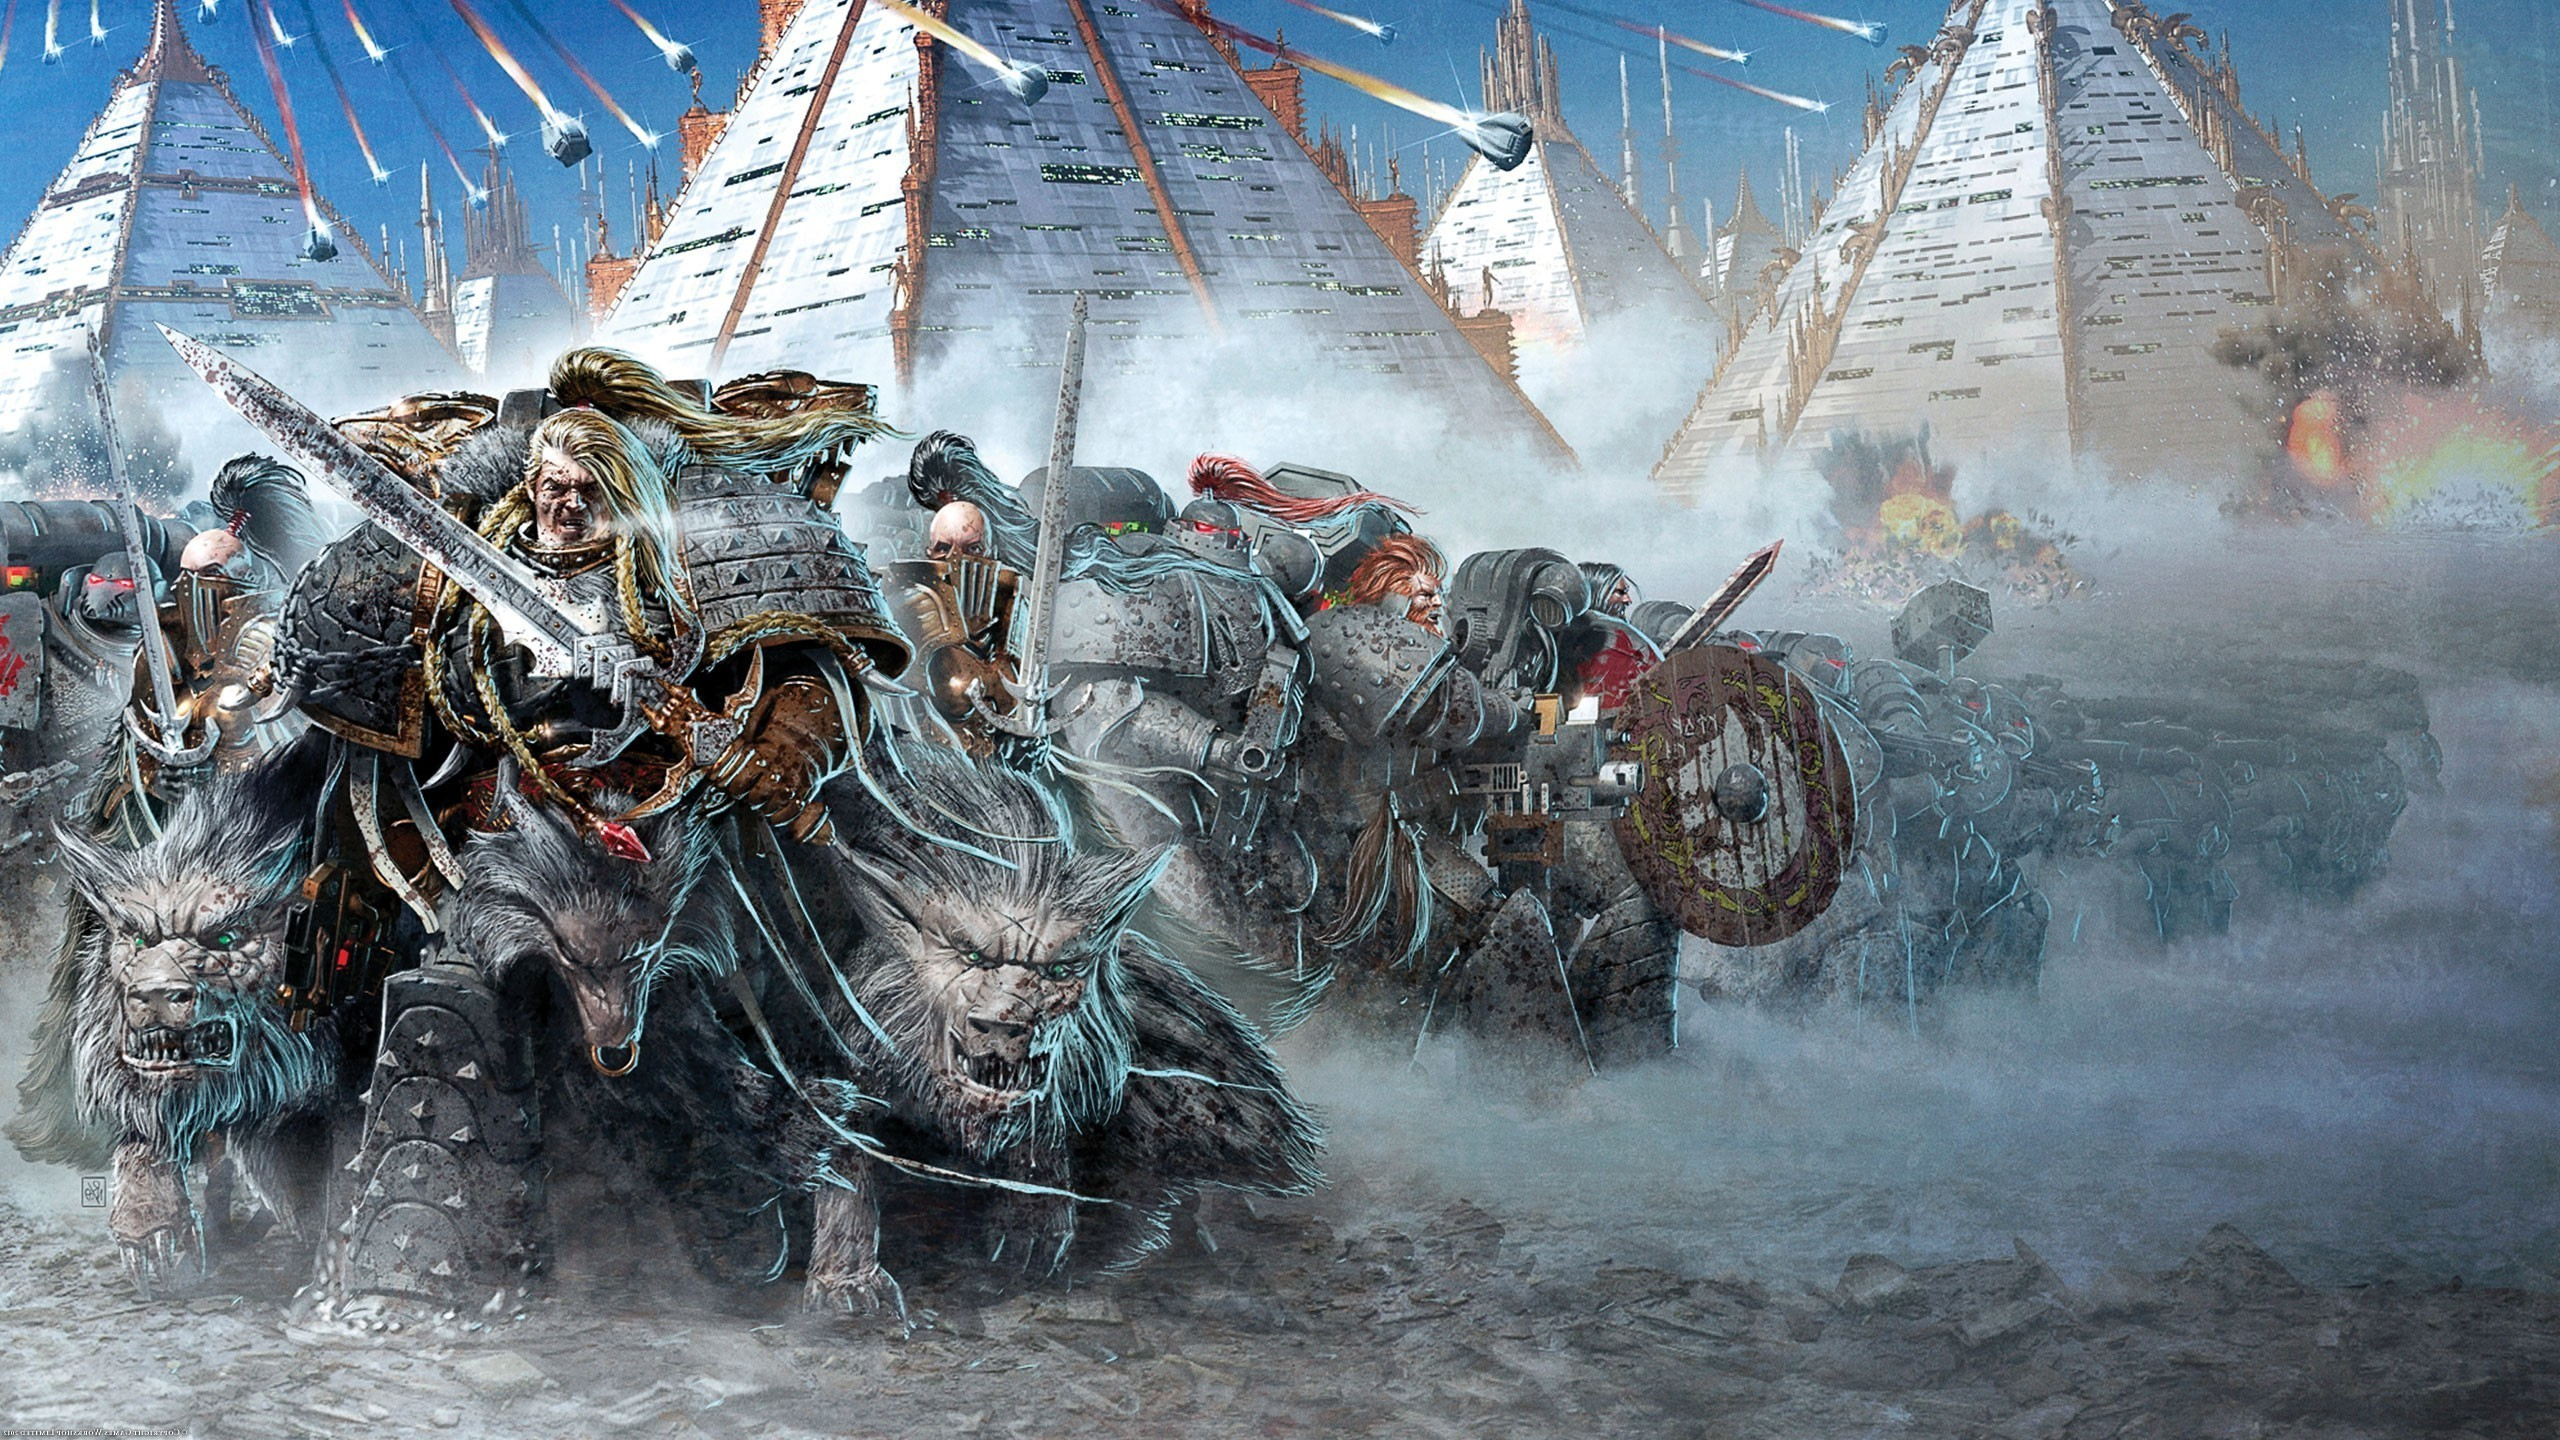 warhammer 40k wallpaper,cg artwork,strategy video game,battle,mythology,warlord